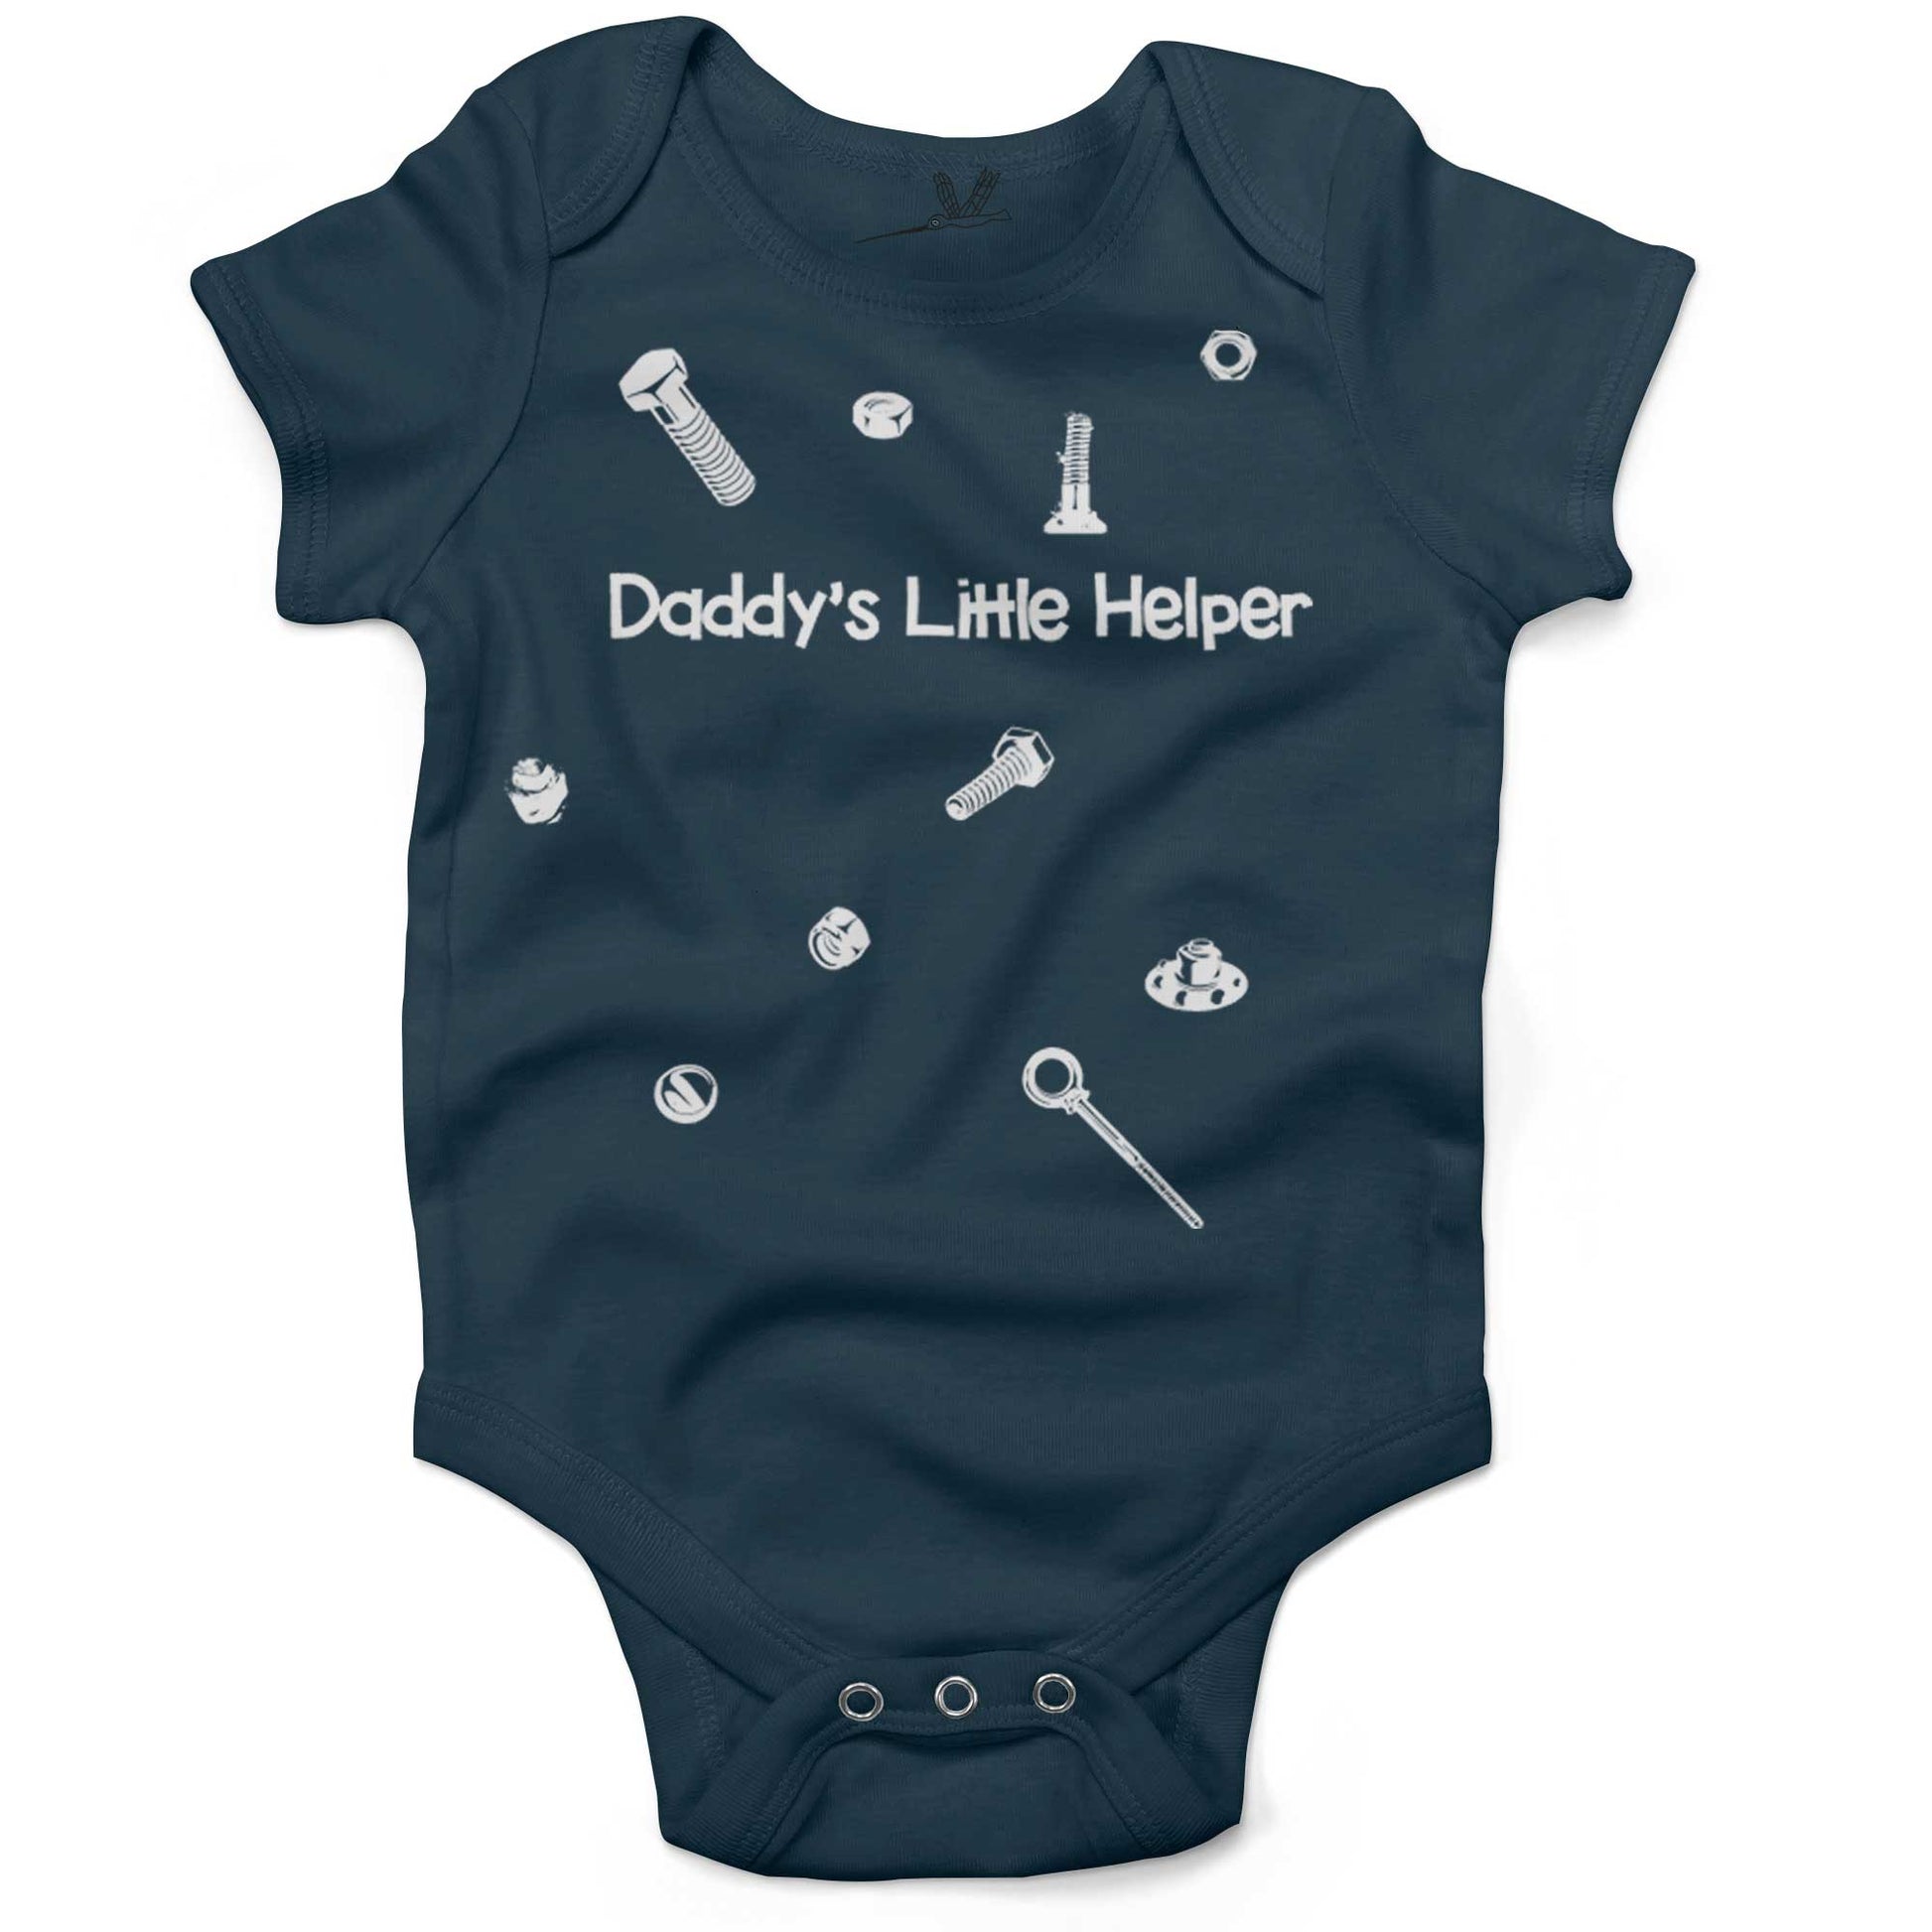 Daddy's Little Helper Infant Bodysuit or Raglan Baby Tee-Organic Pacific Blue-3-6 months